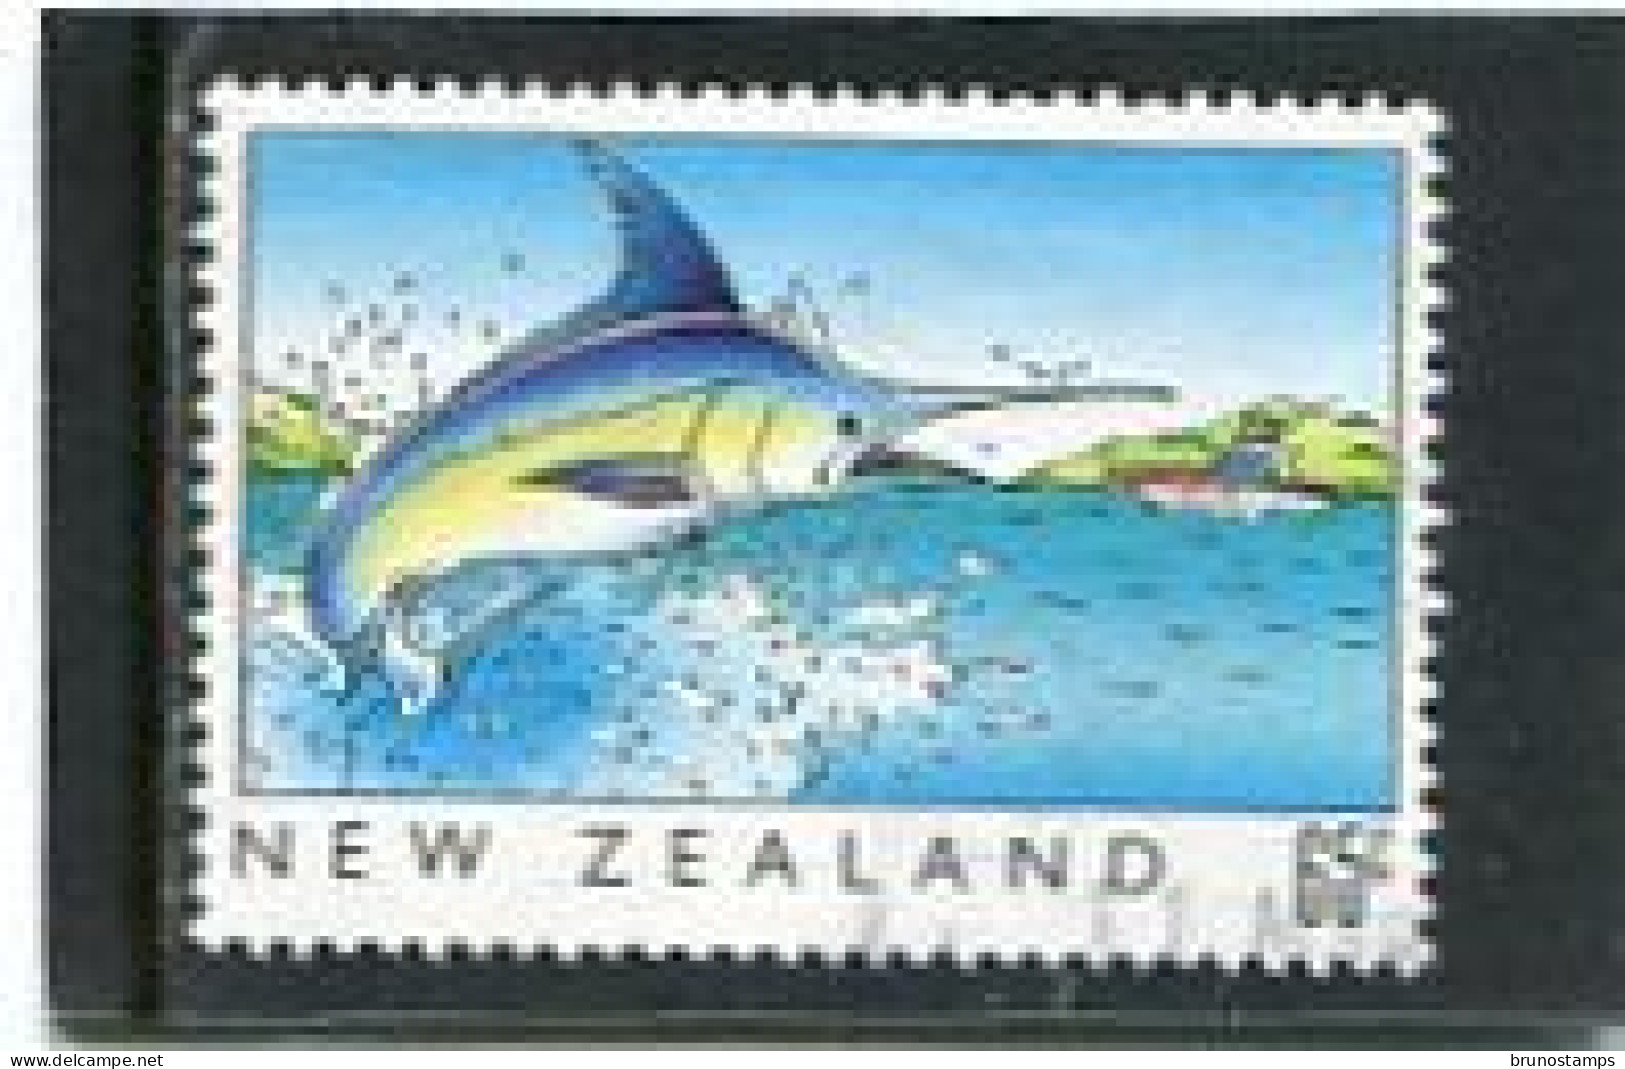 NEW ZEALAND - 1989  65c  FISHING  FINE USED - Gebraucht